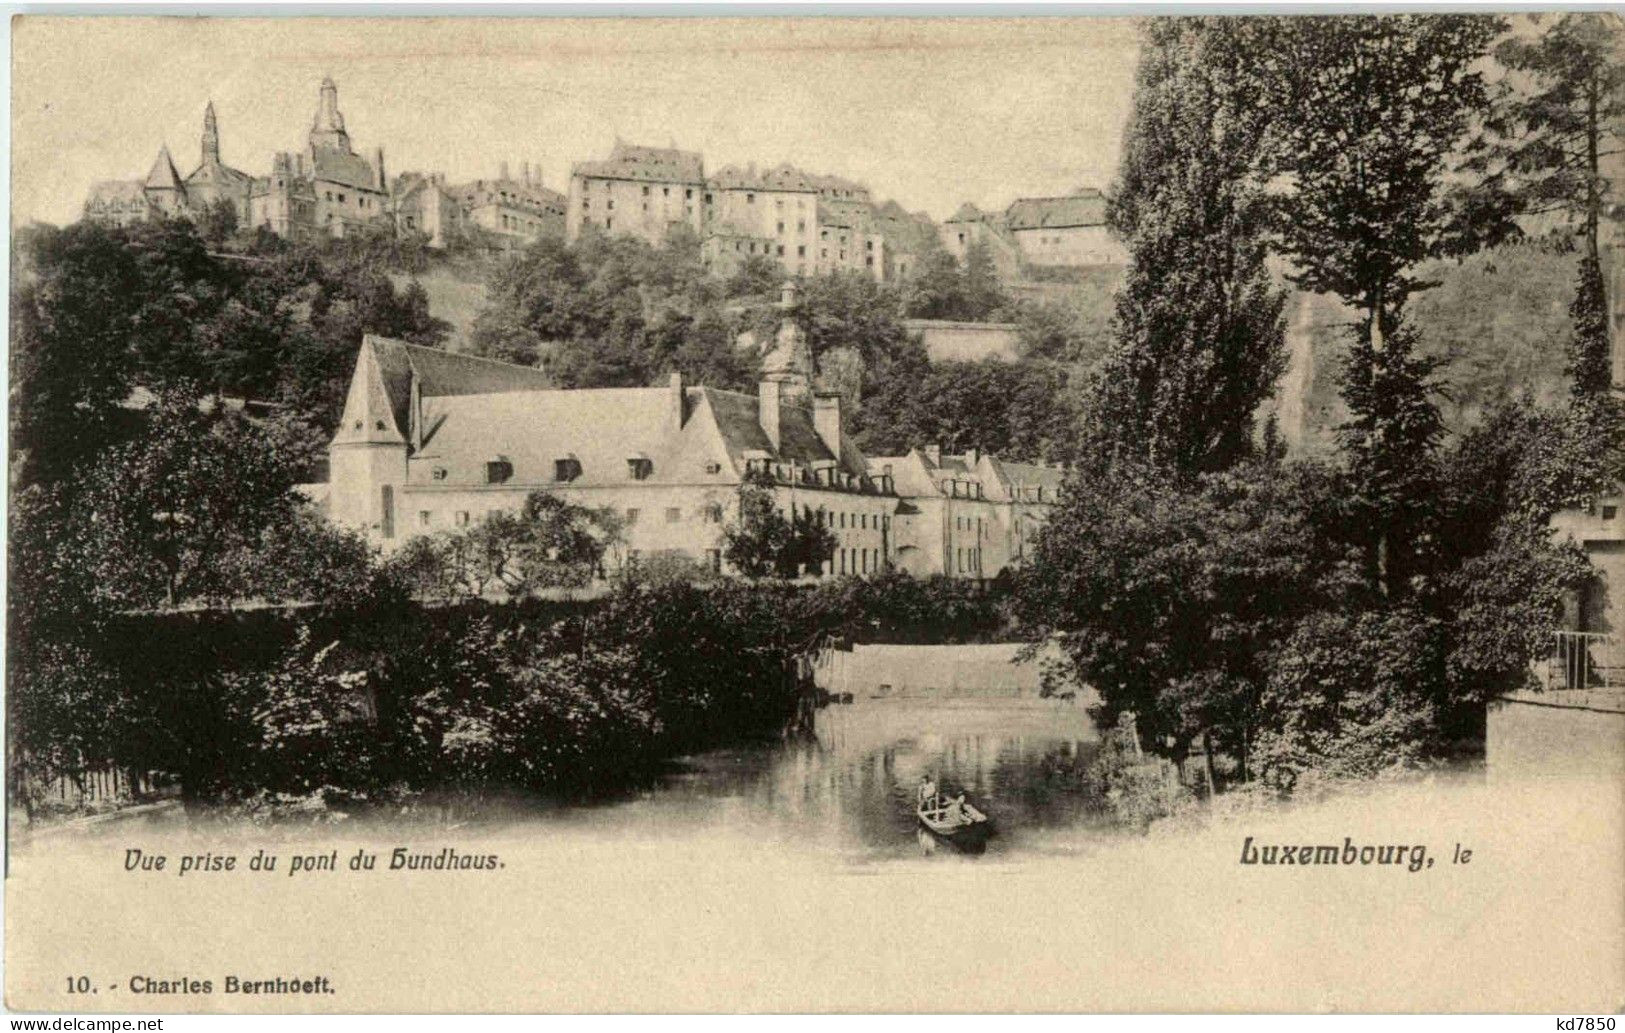 Luxembourg - Lussemburgo - Città